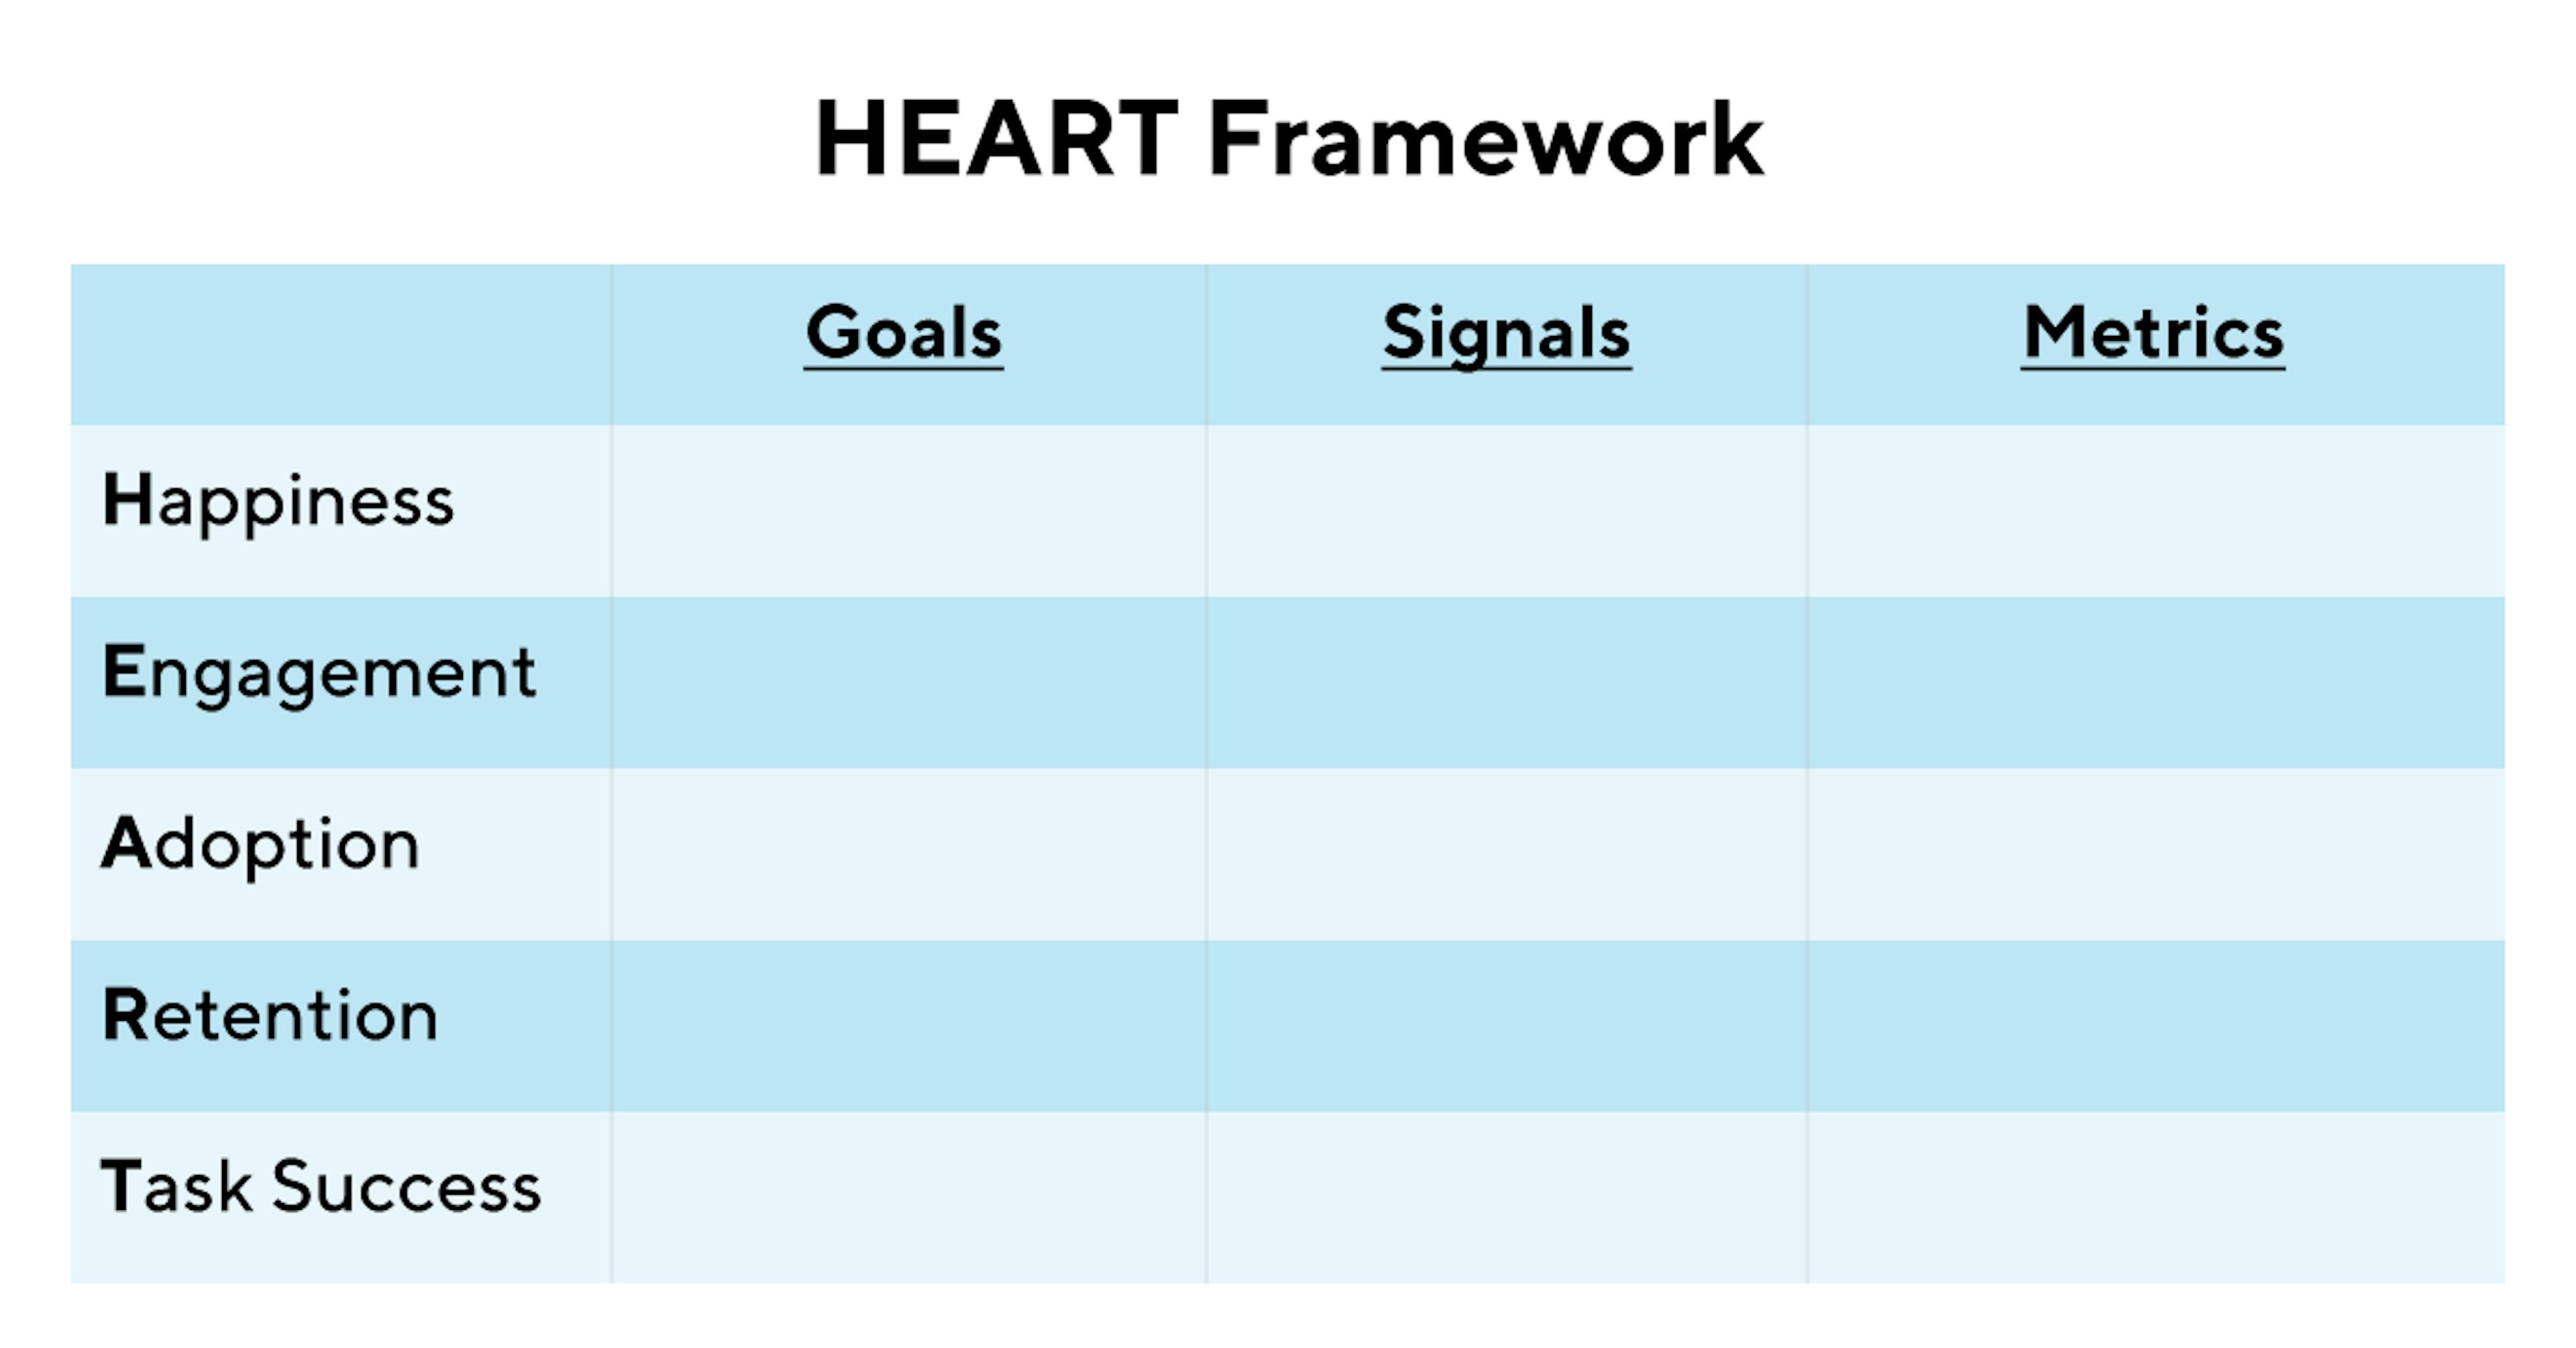 HEART framework